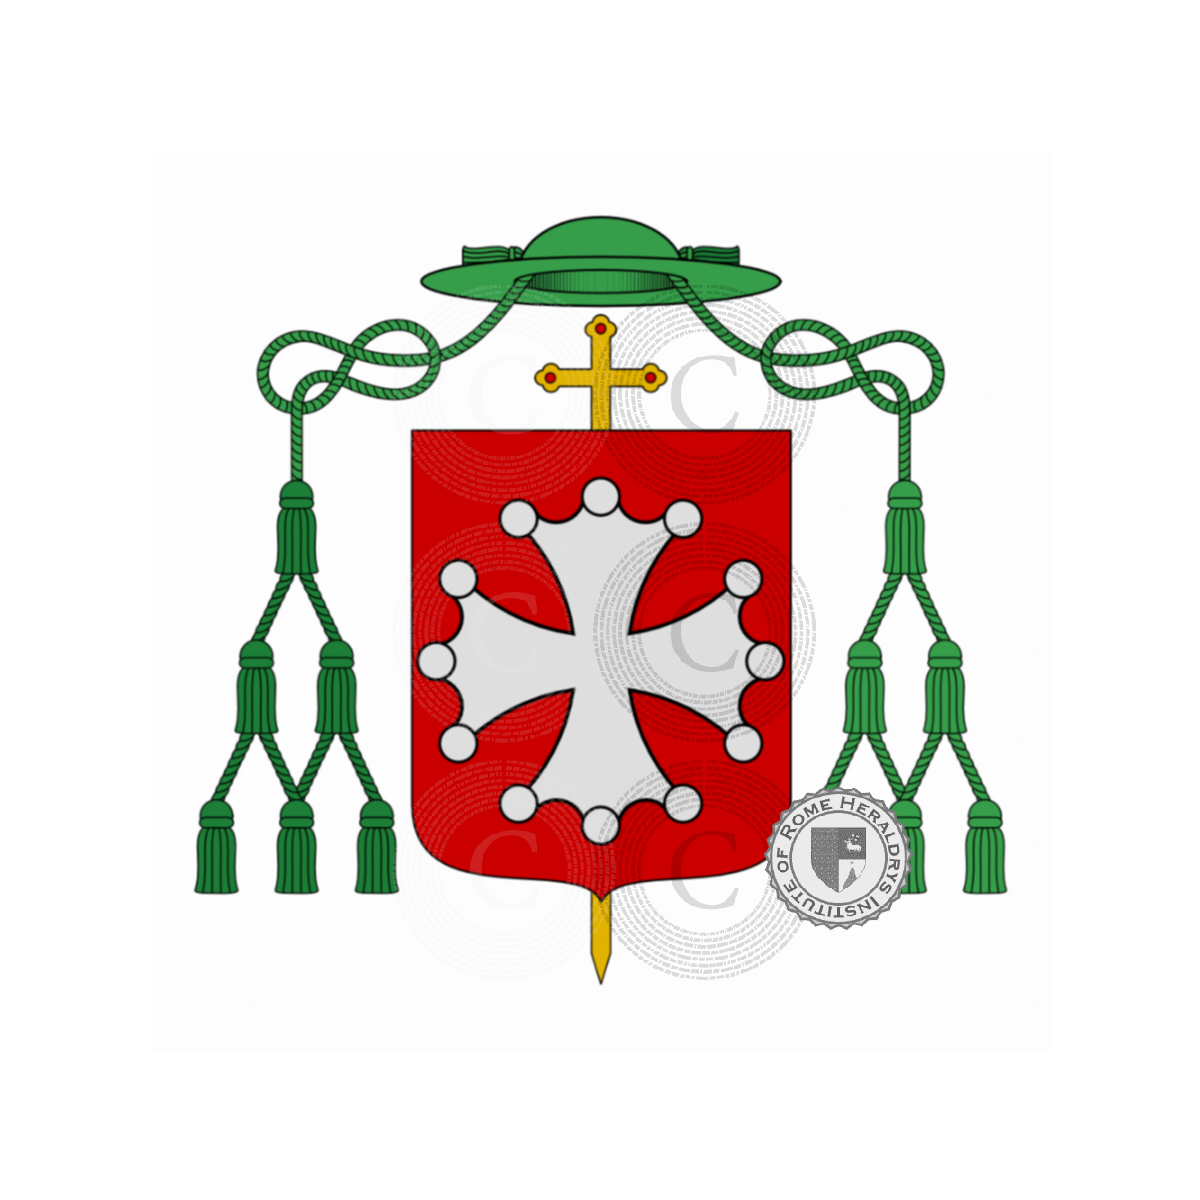 Wappen der FamiliePalladini